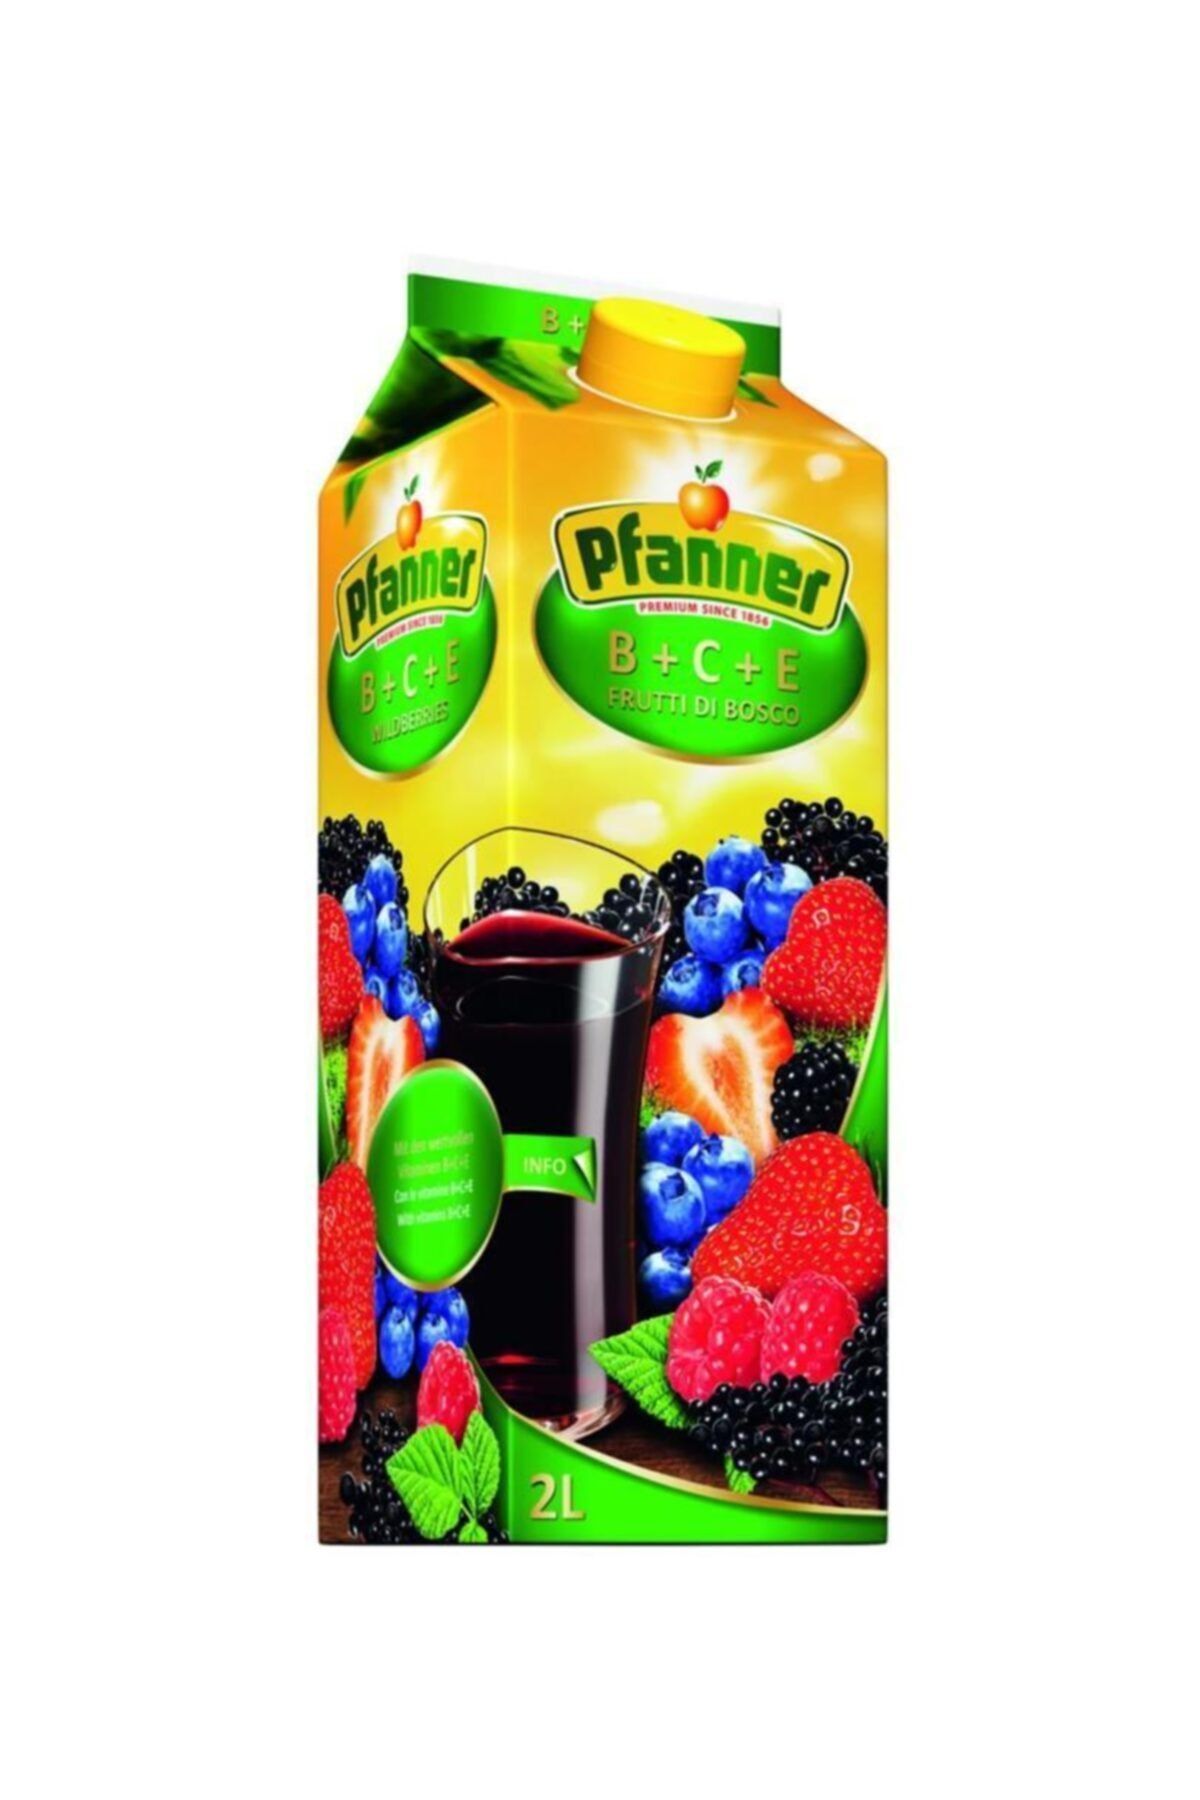 Pfanner Meyve Suyu B + C + E Vitaminli 2 lt. - 6 Adet